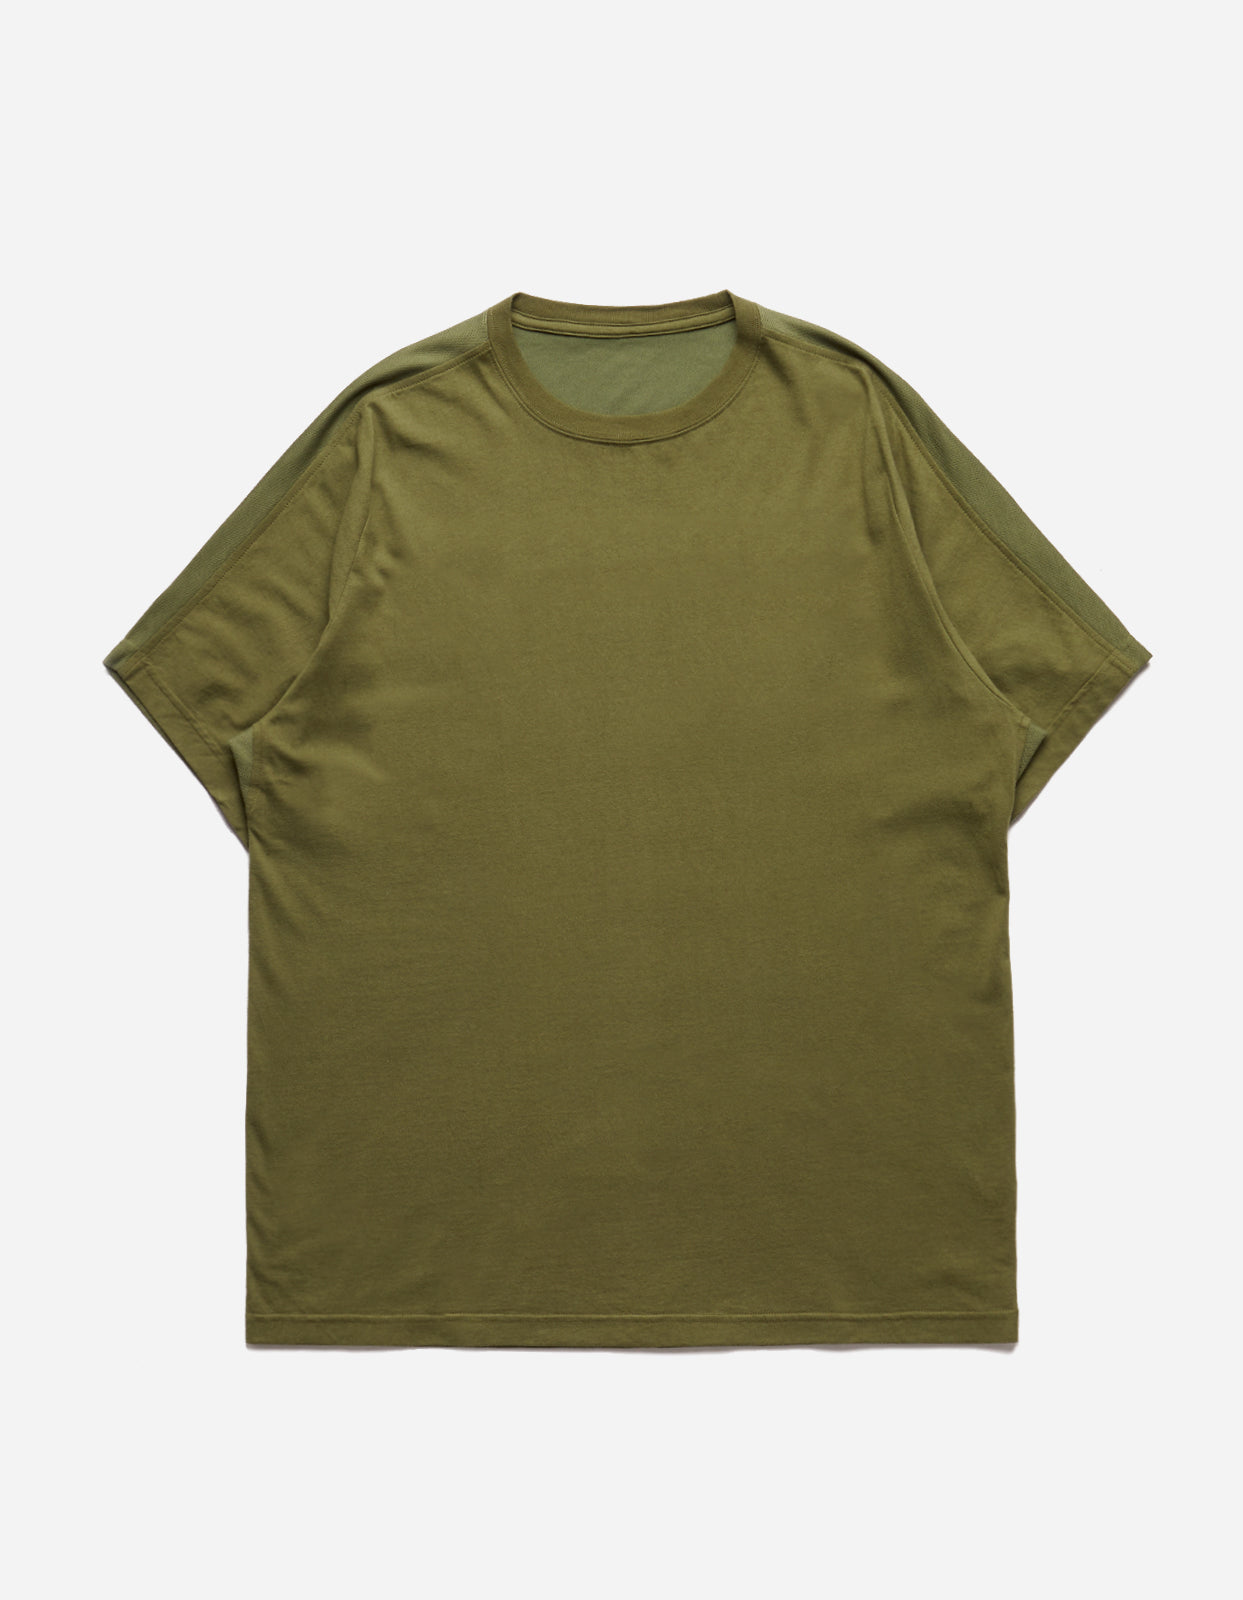 5045 Polartec Dry T-Shirt Olive OG-107F